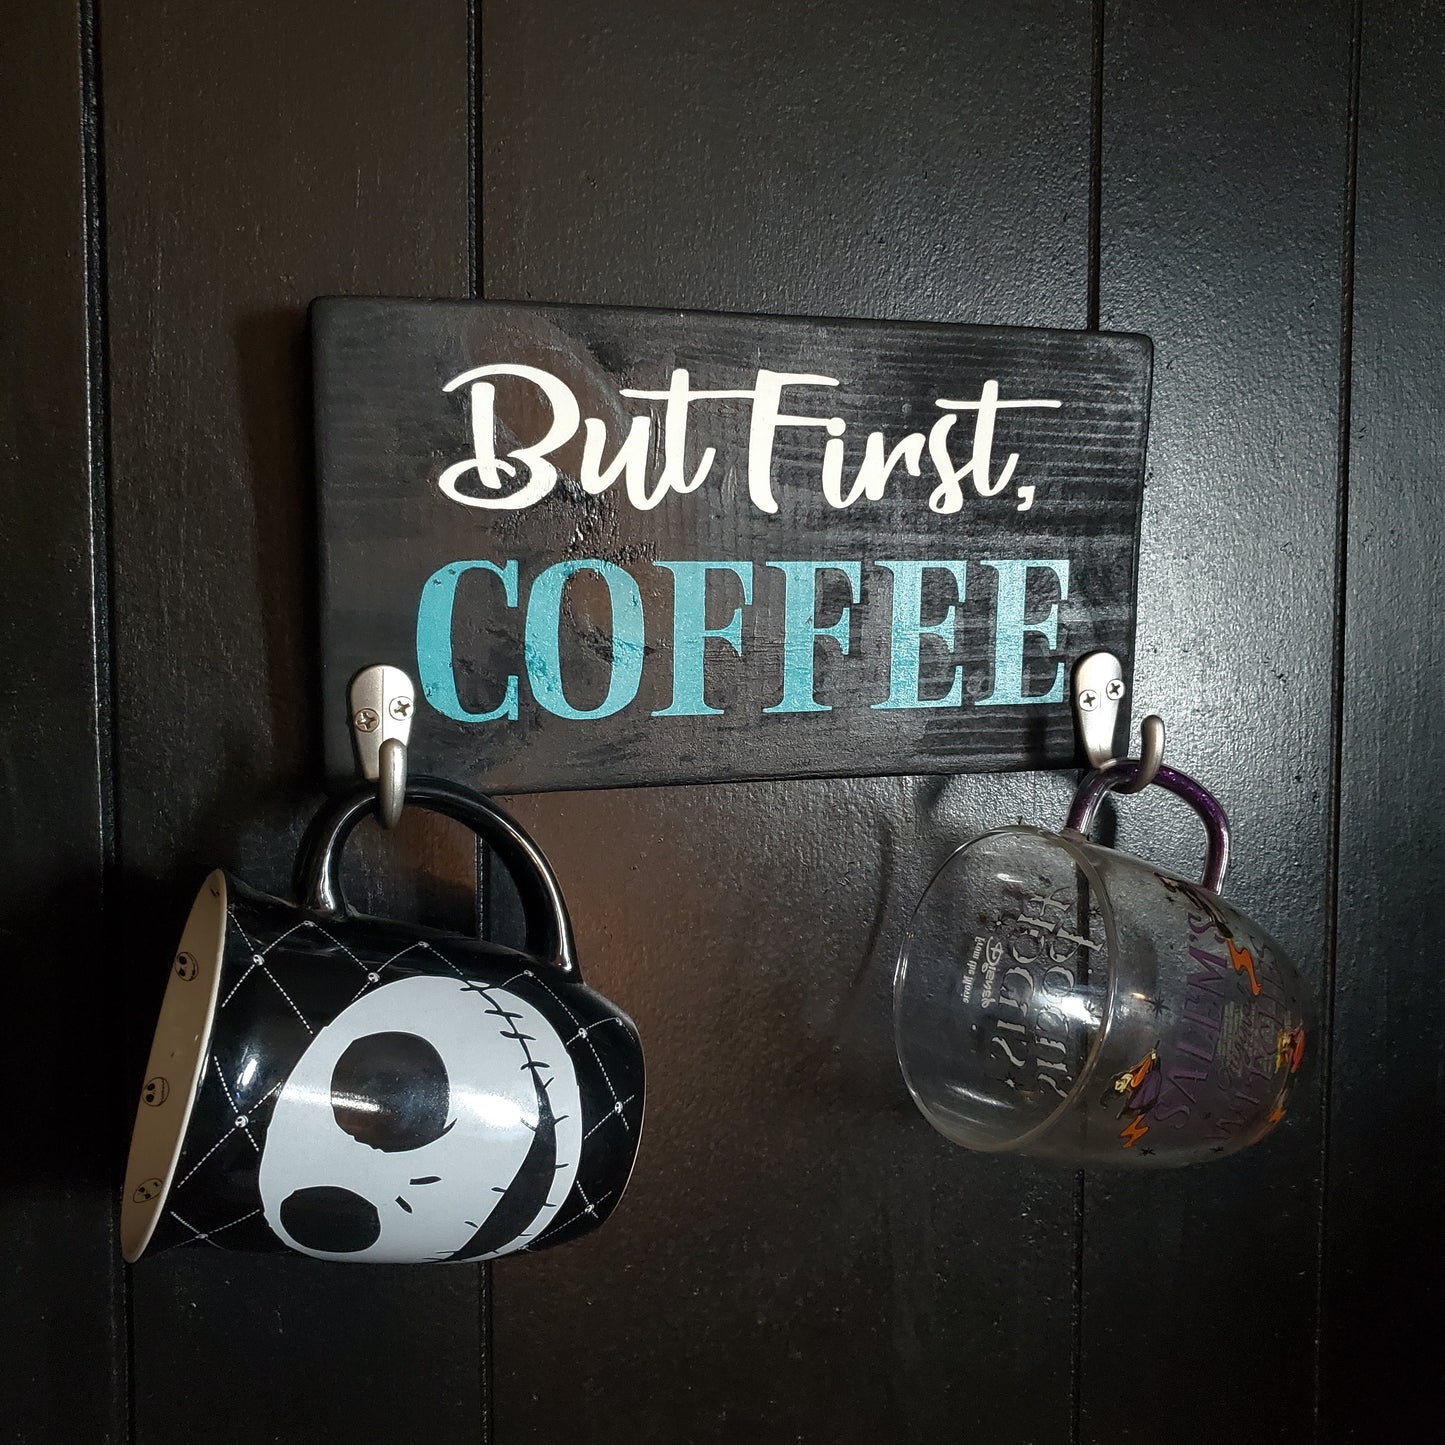 But First Coffee Mug Holder Sign